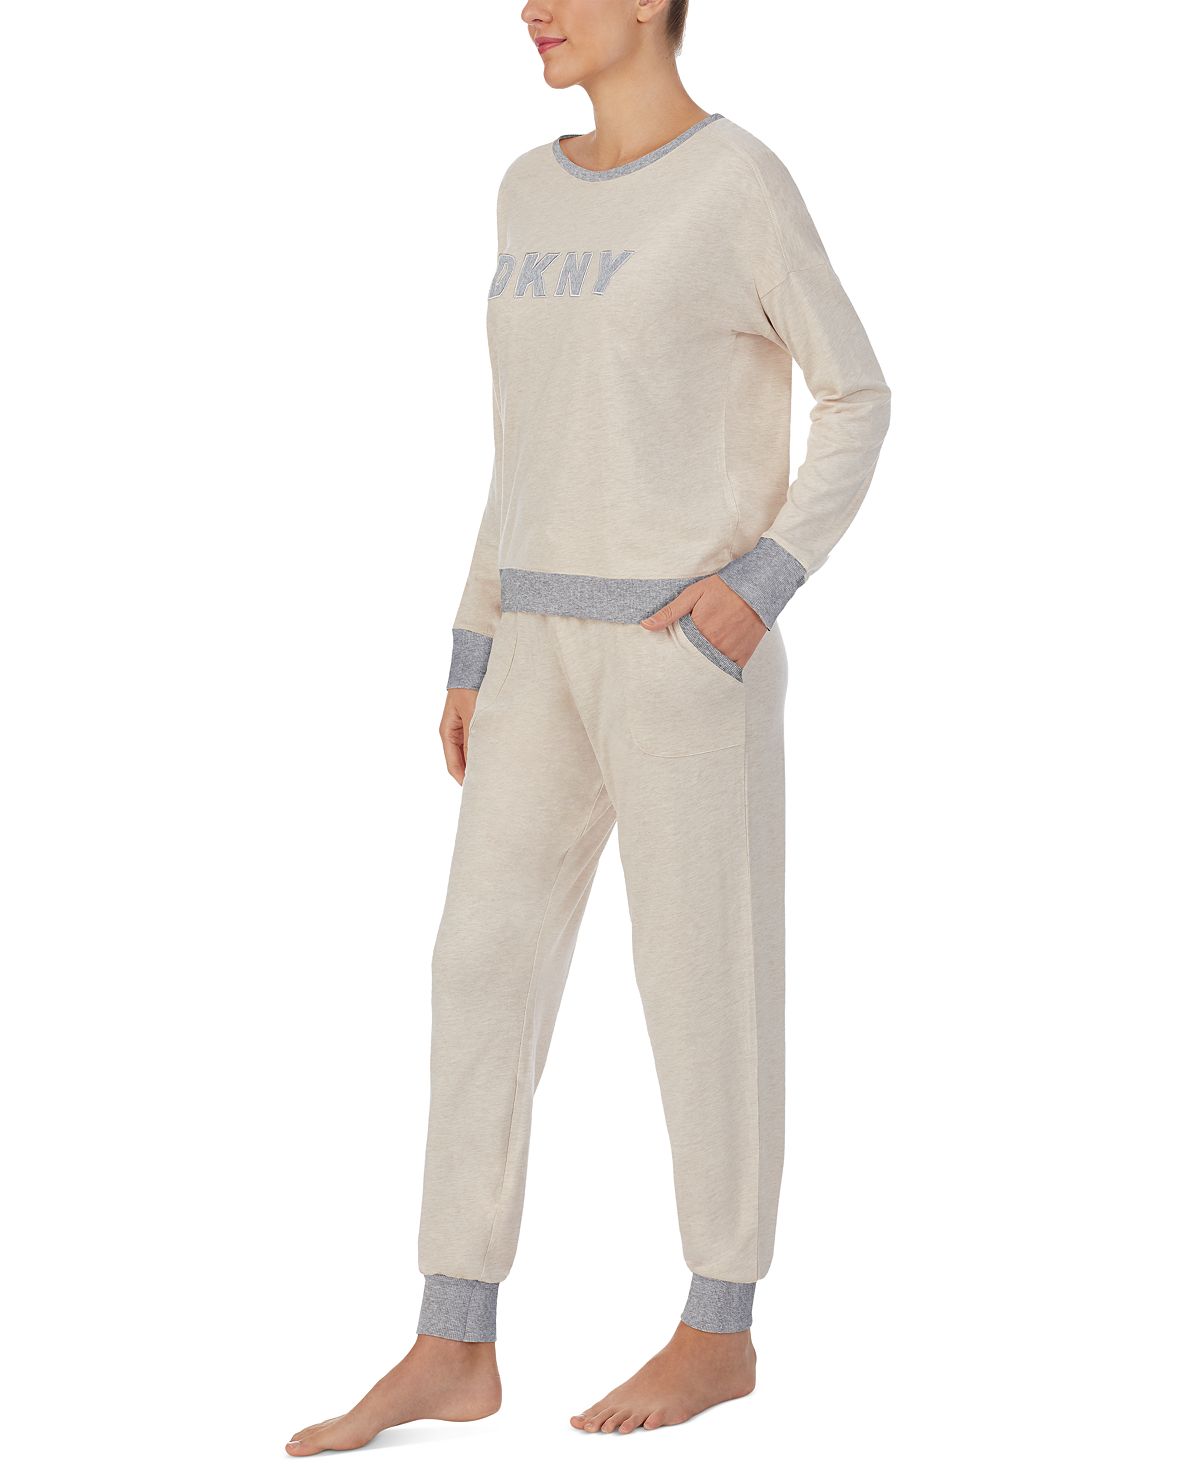 Dkny Embroidered Logo Top & Jogger Pants Pajamas Set Oatmeal